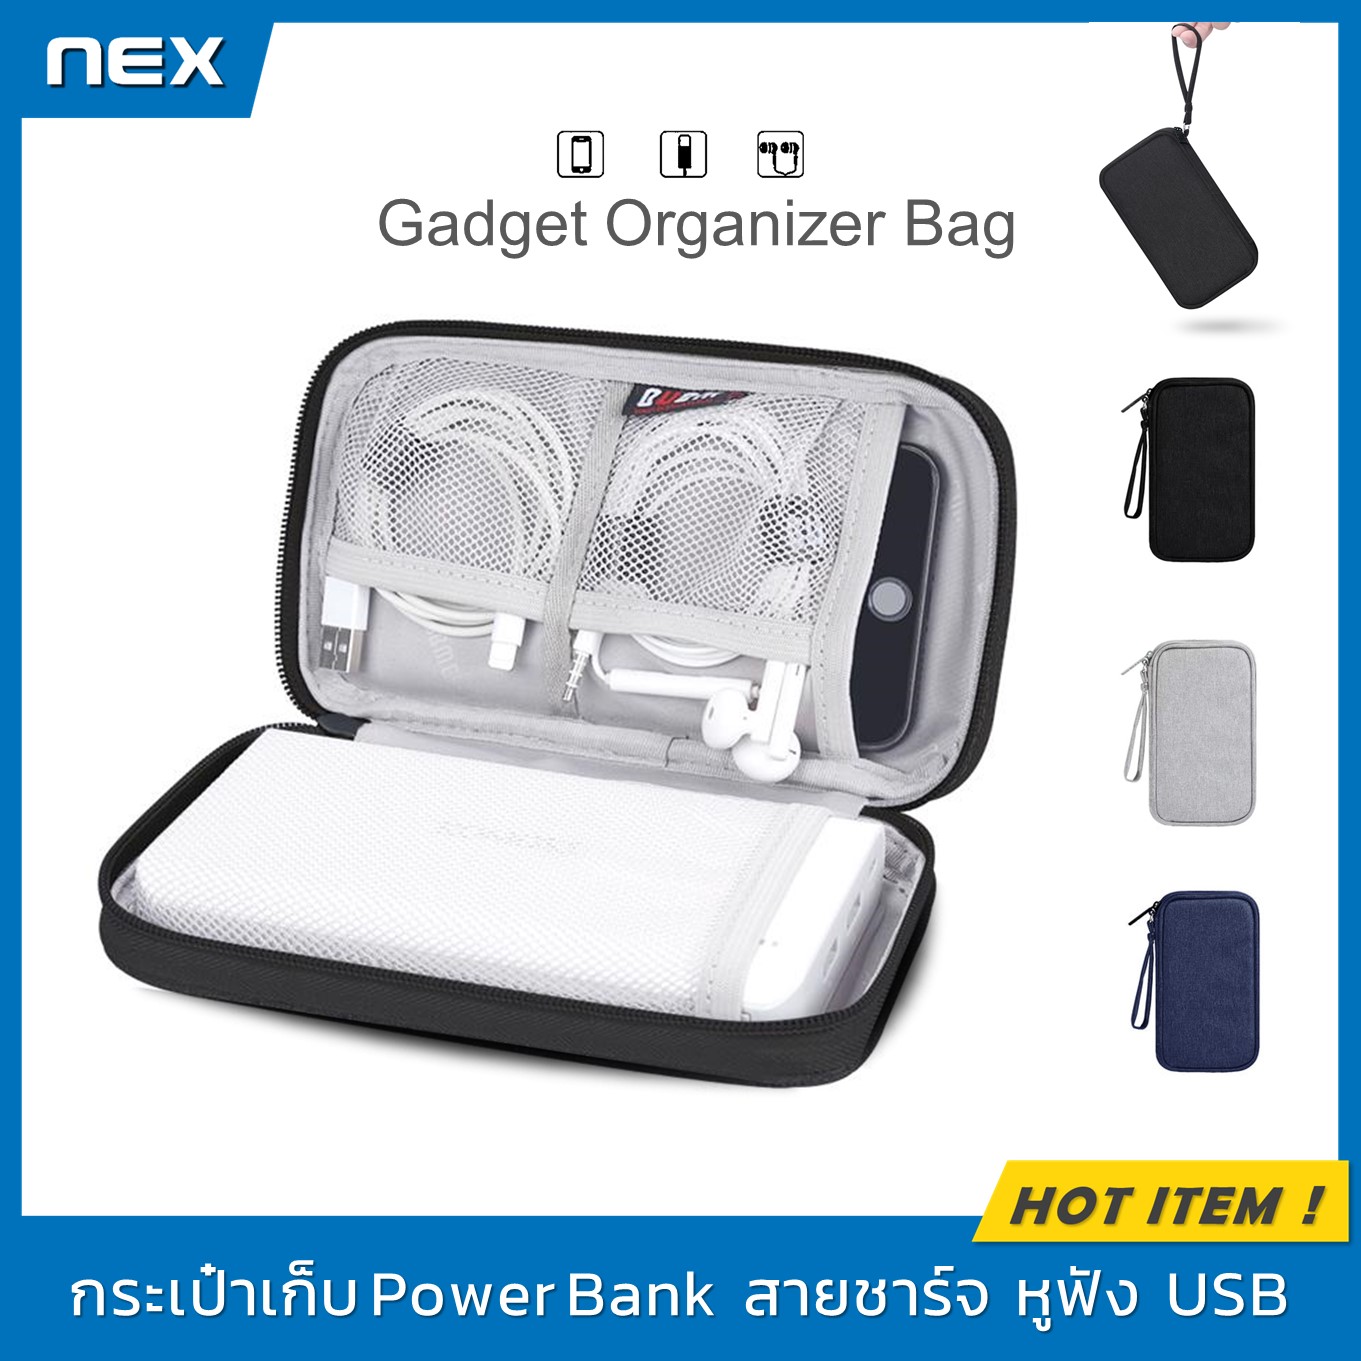 NEX กระเป๋าPower Bank กระเป๋าเก็บแบตสำรอง สายชาร์จ USB SD การ์ด โทรศัพท์มือถือ หูฟัง ซองมือถือ กระเป๋าจัดระเบียบเดินทาง Travel Organizer Bag for Power Bank Gadget